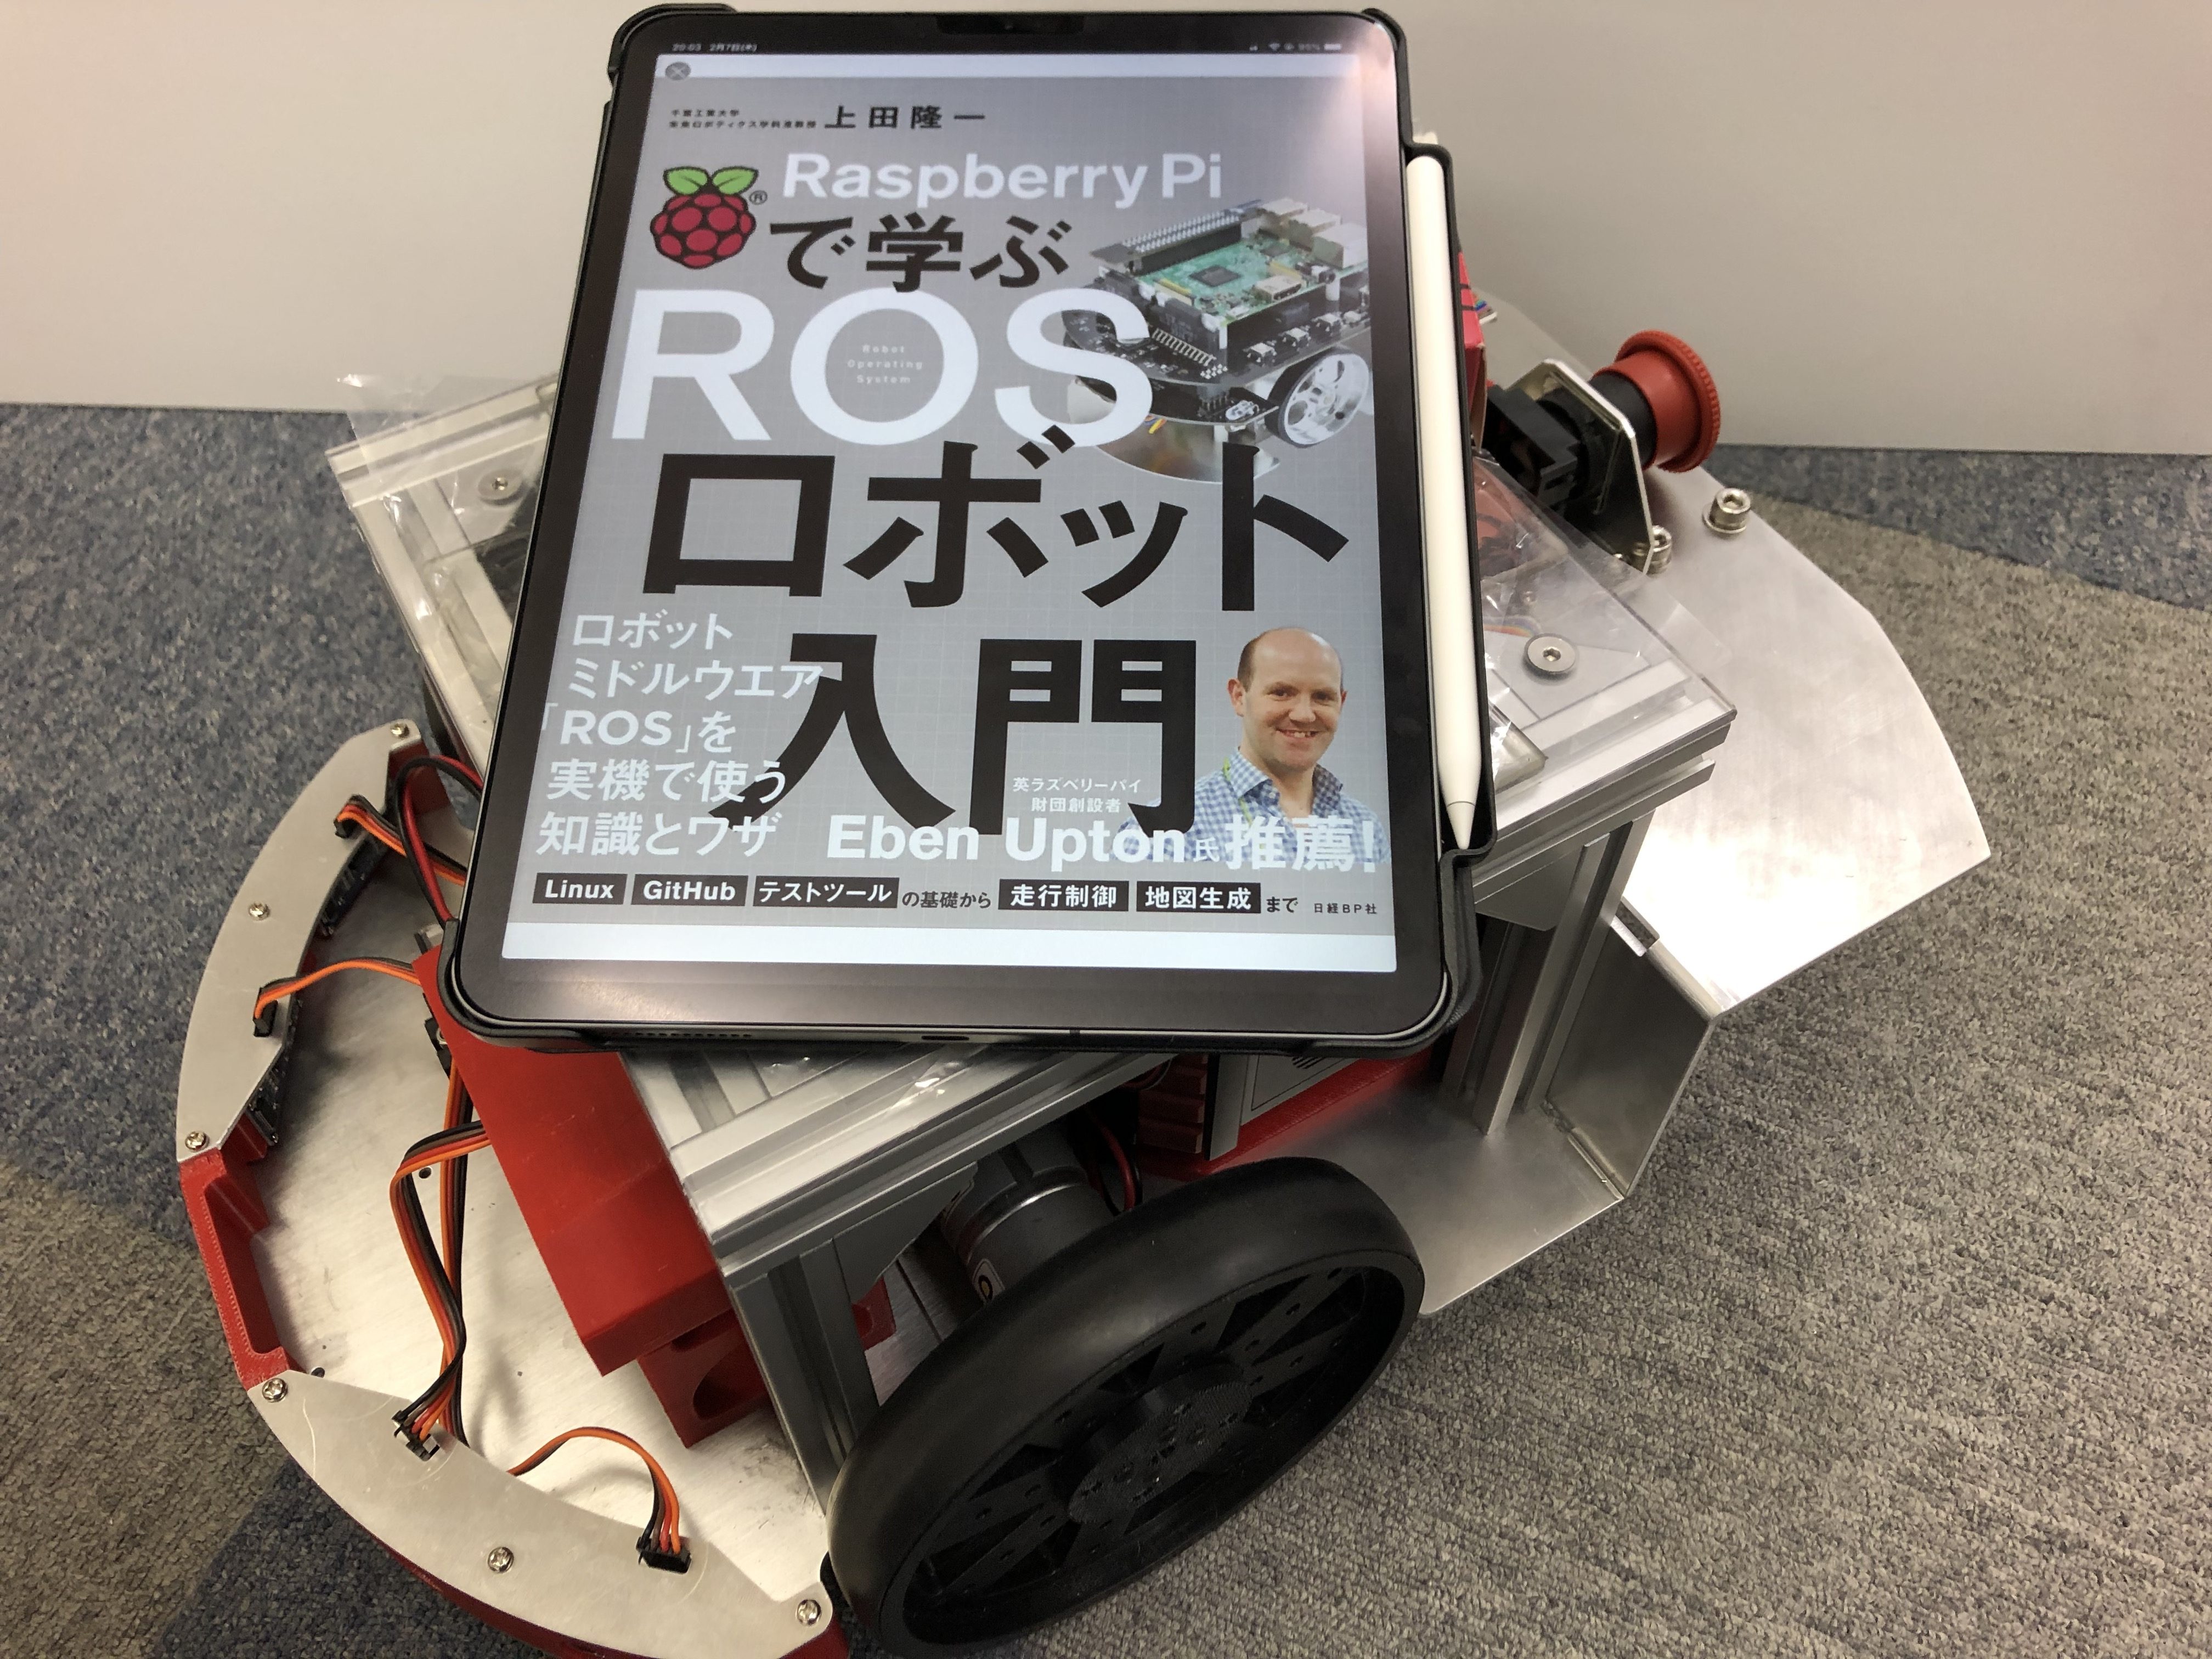 Raspberry Pi Catと書籍「Raspberry Piで学ぶ ROSロボット入門」でROS